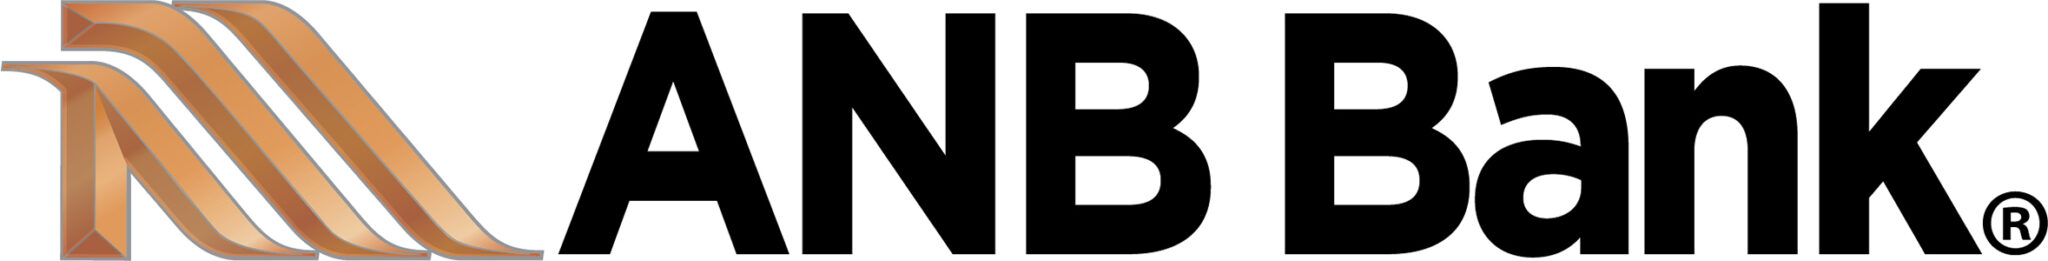 ANB Bank logo four color gradients_2019